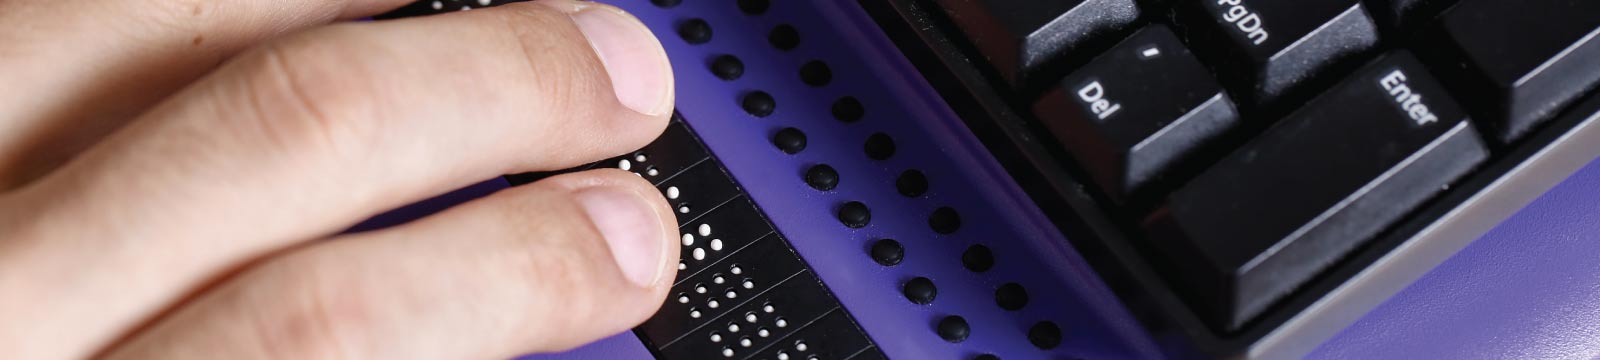 Hand Using Braille Keyboard